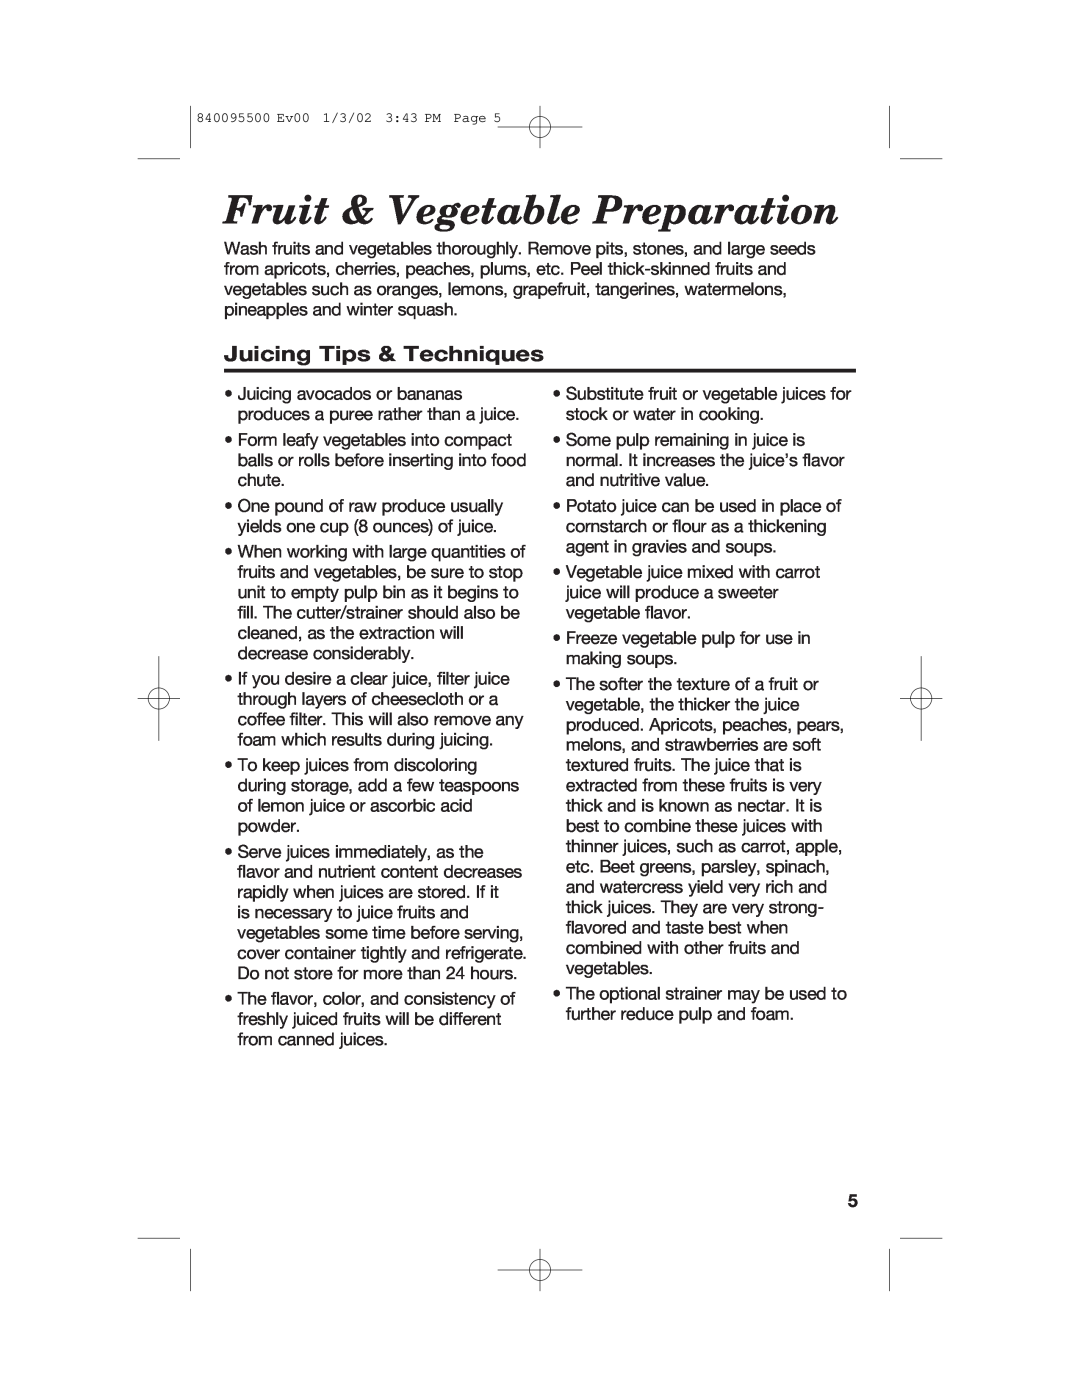 Hamilton Beach 840095500 manual Fruit & Vegetable Preparation, Juicing Tips & Techniques 